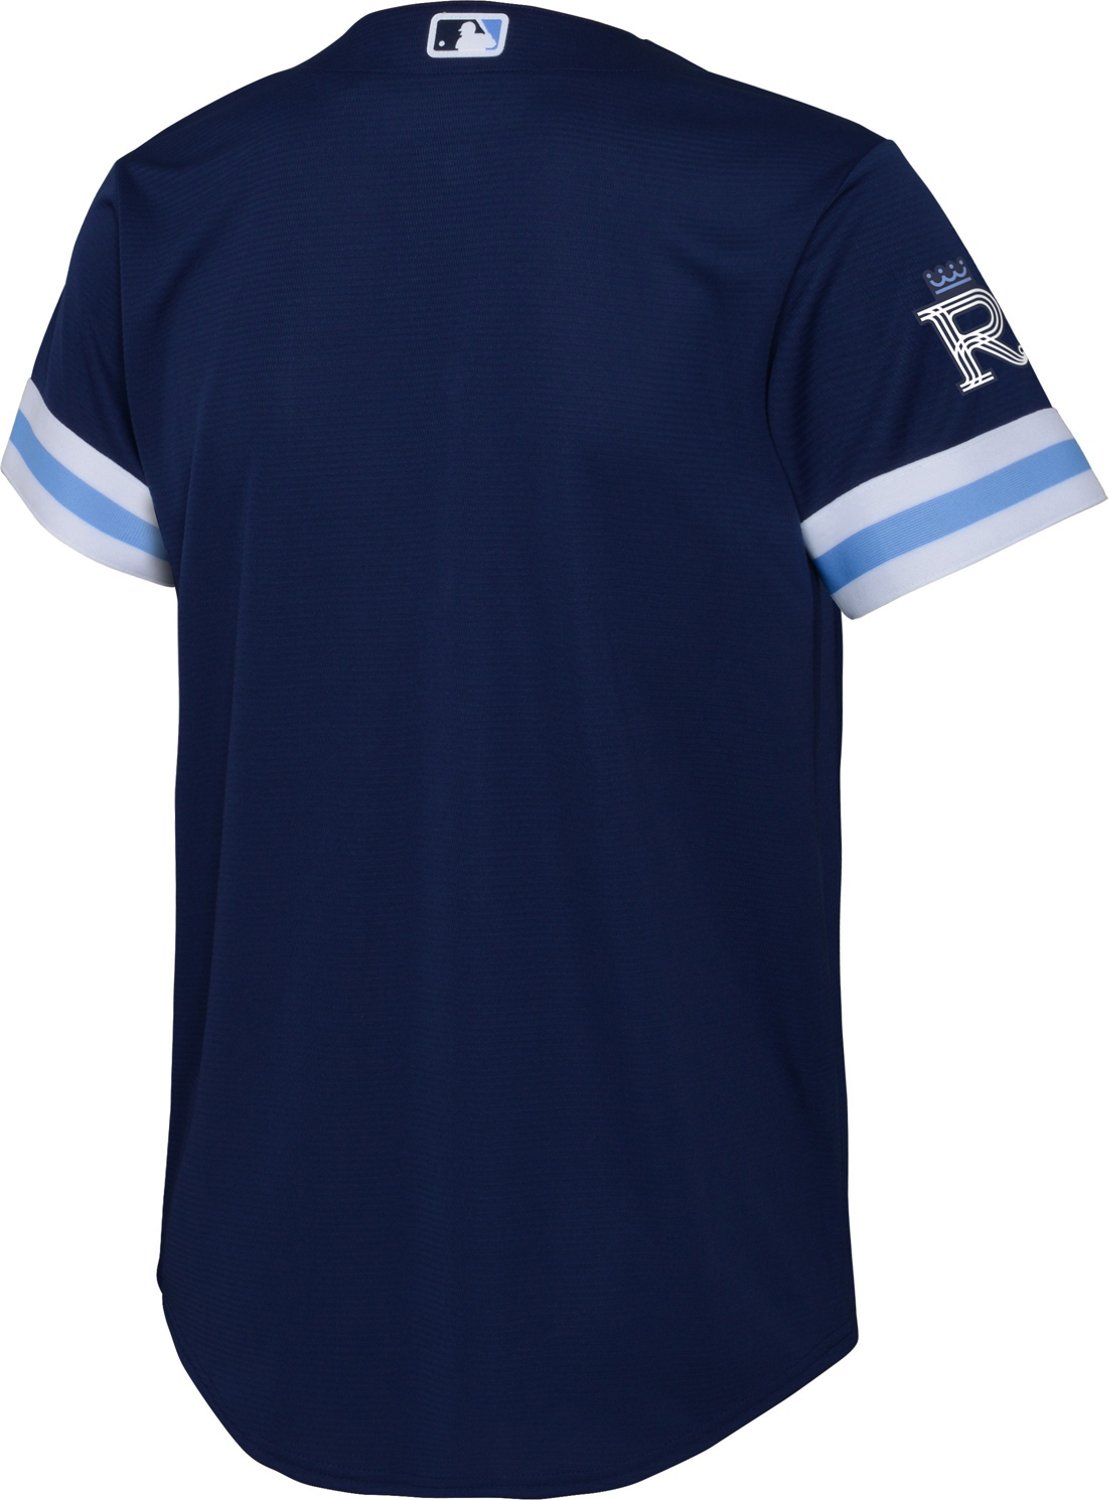 Nike Men's Kansas City Royals City Connect Short Sleeve Hoodie